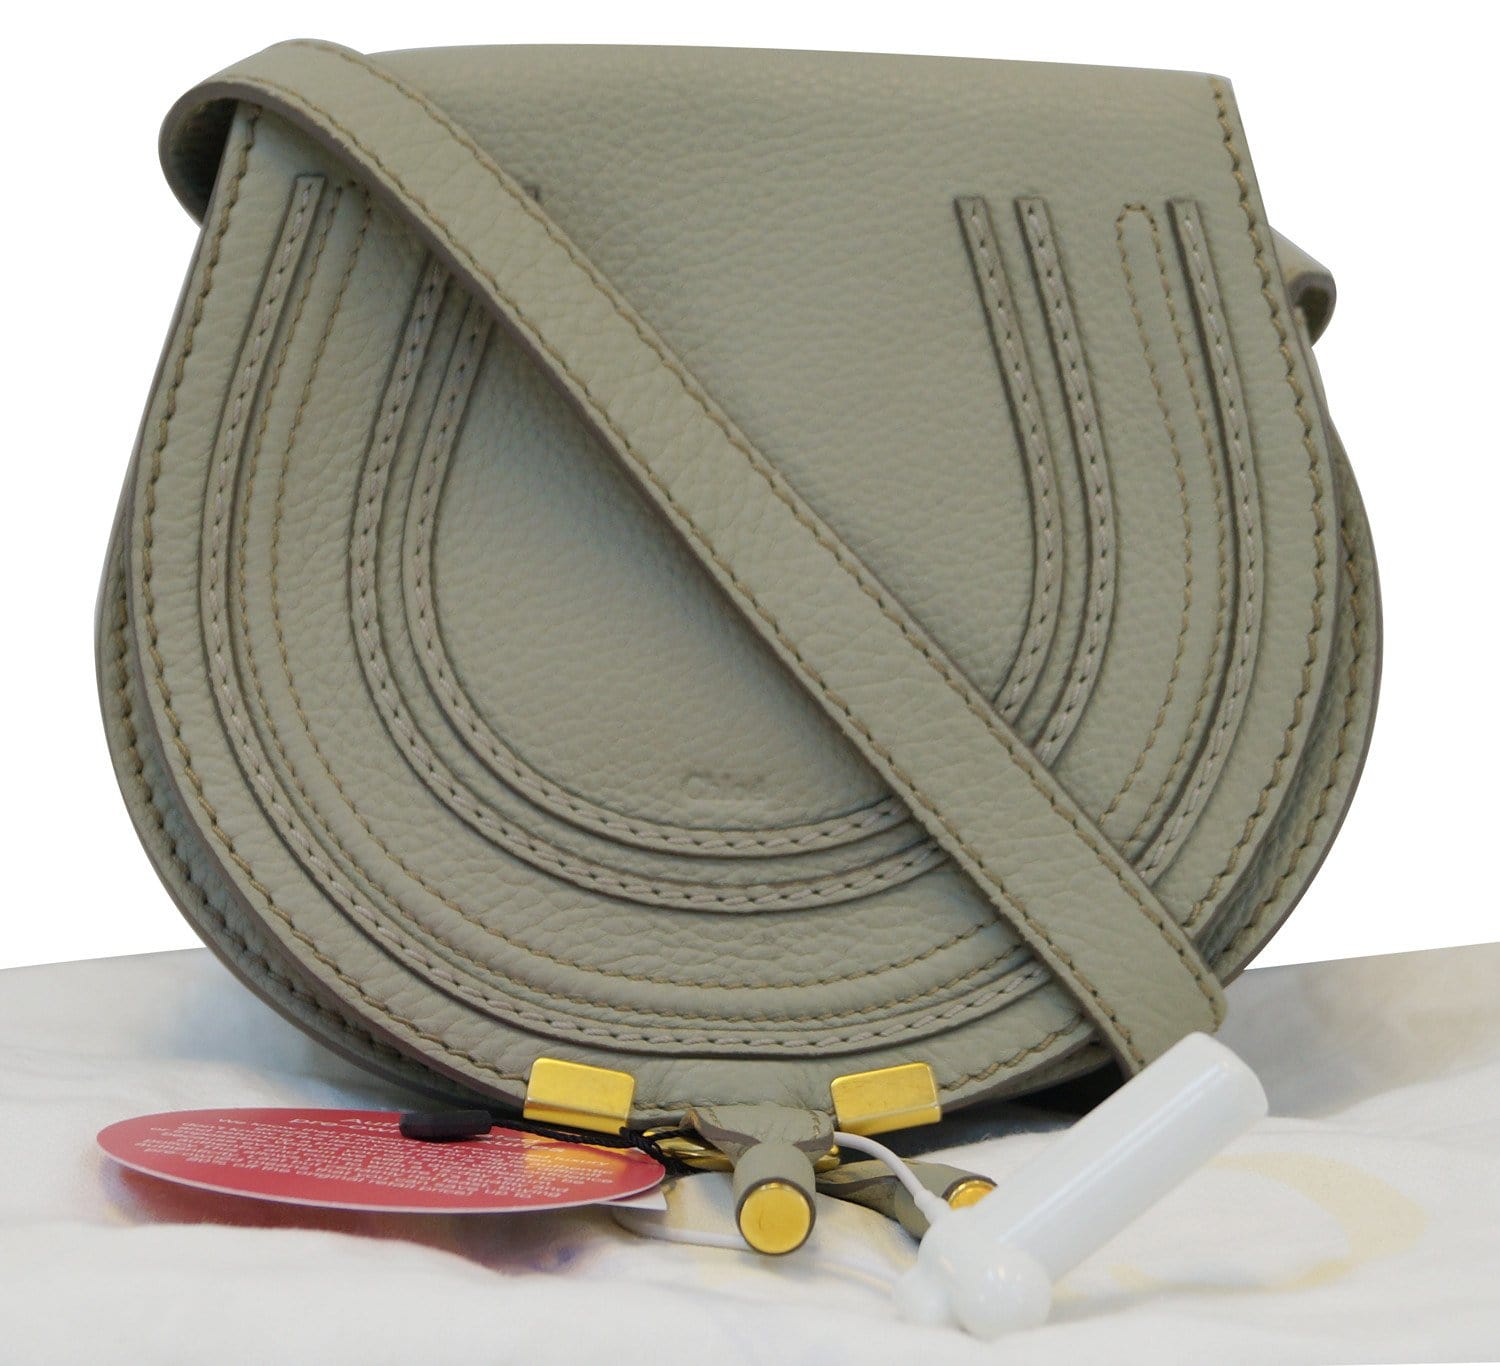 Marcie Mini Leather Shoulder Bag in Grey - Chloe